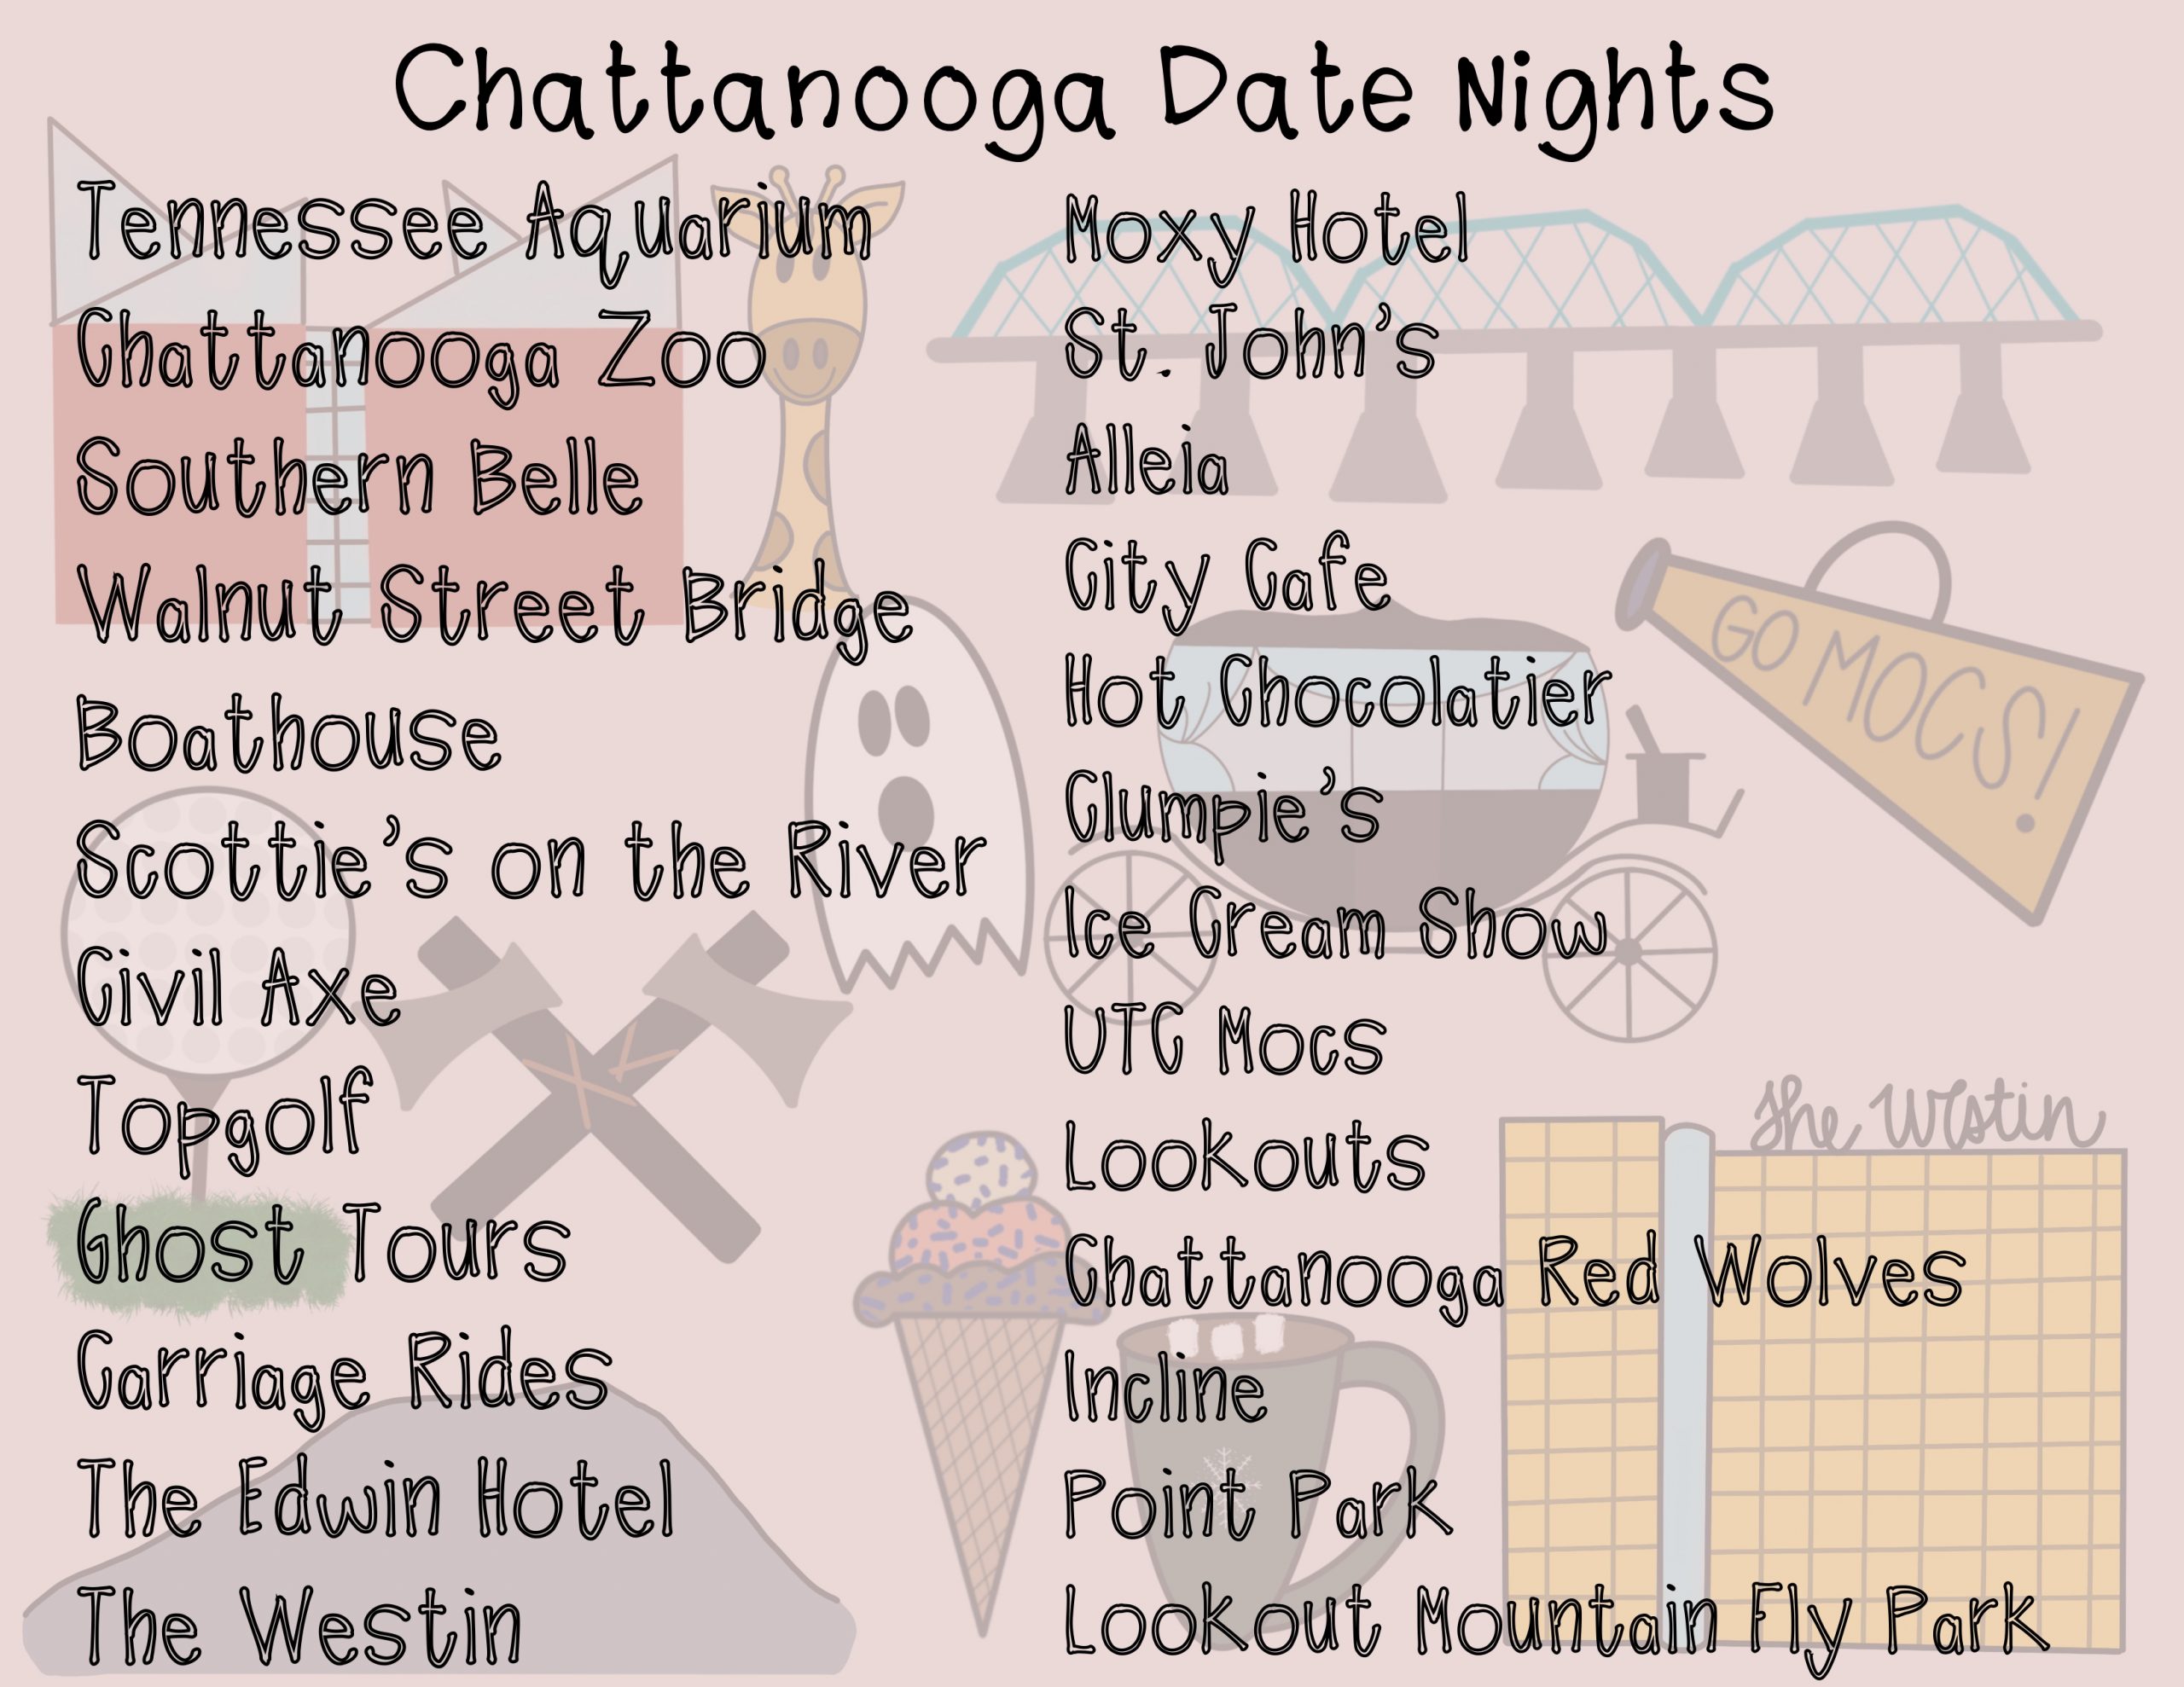 Chattanooga Date Nights